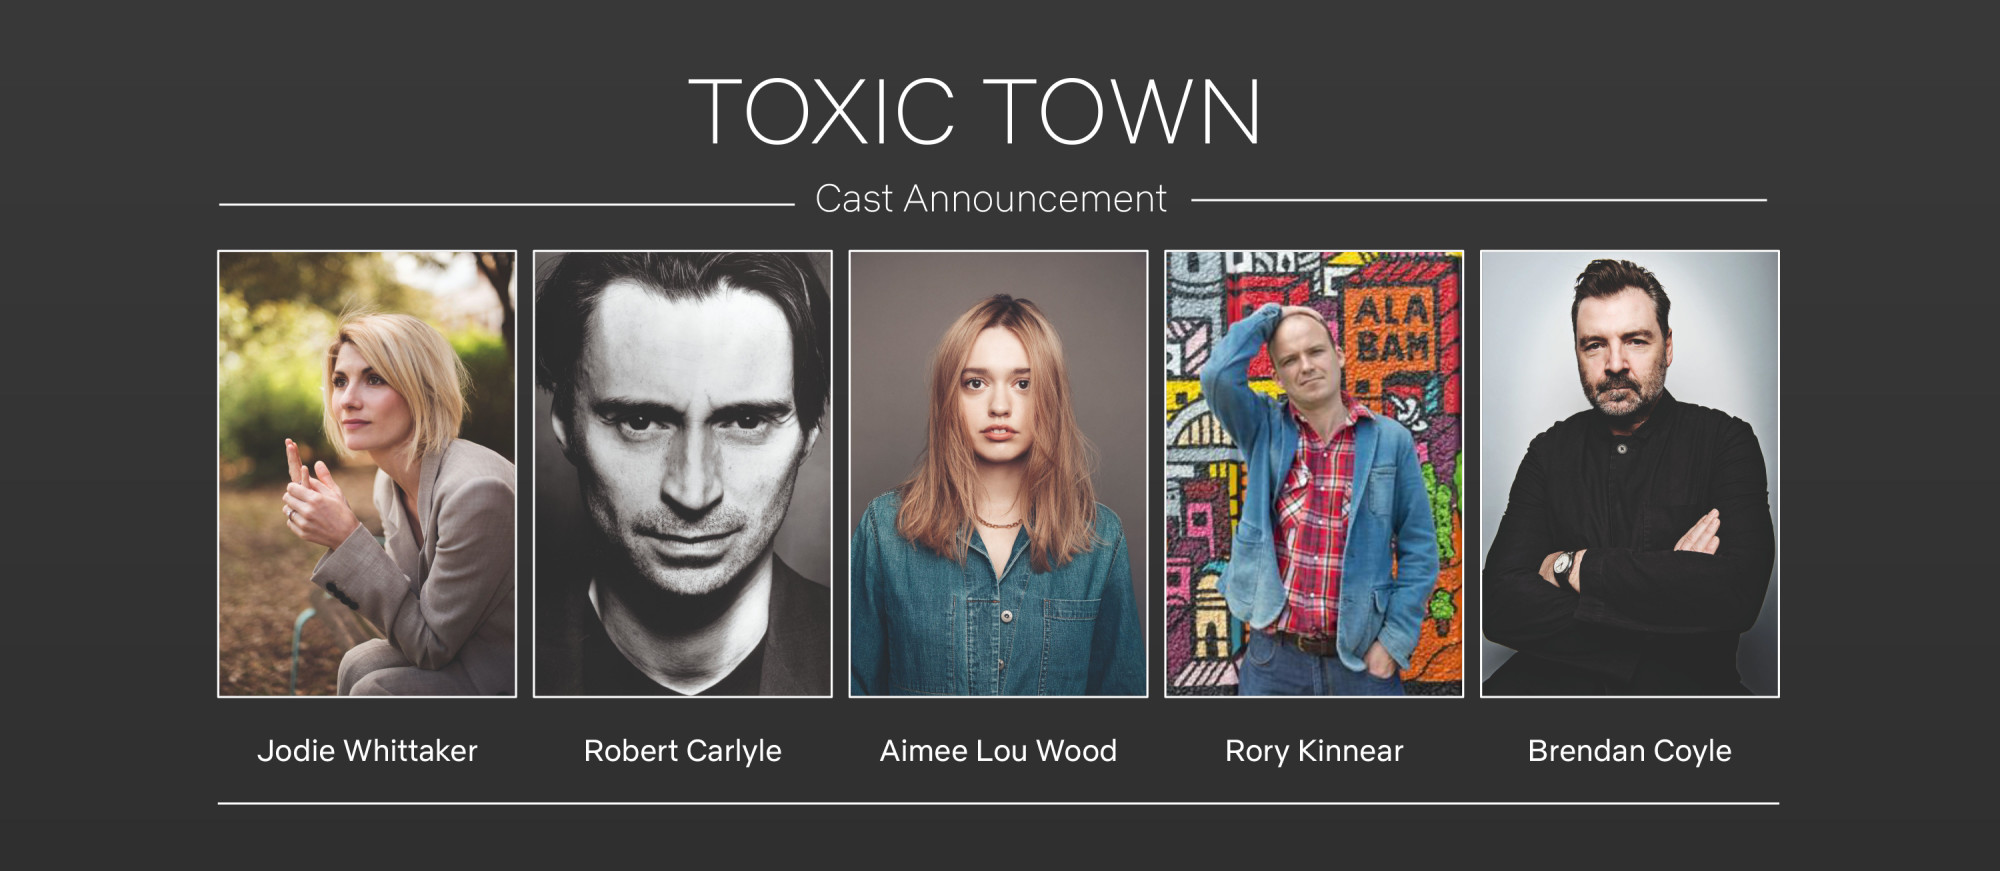 Toxic Town cast announcement